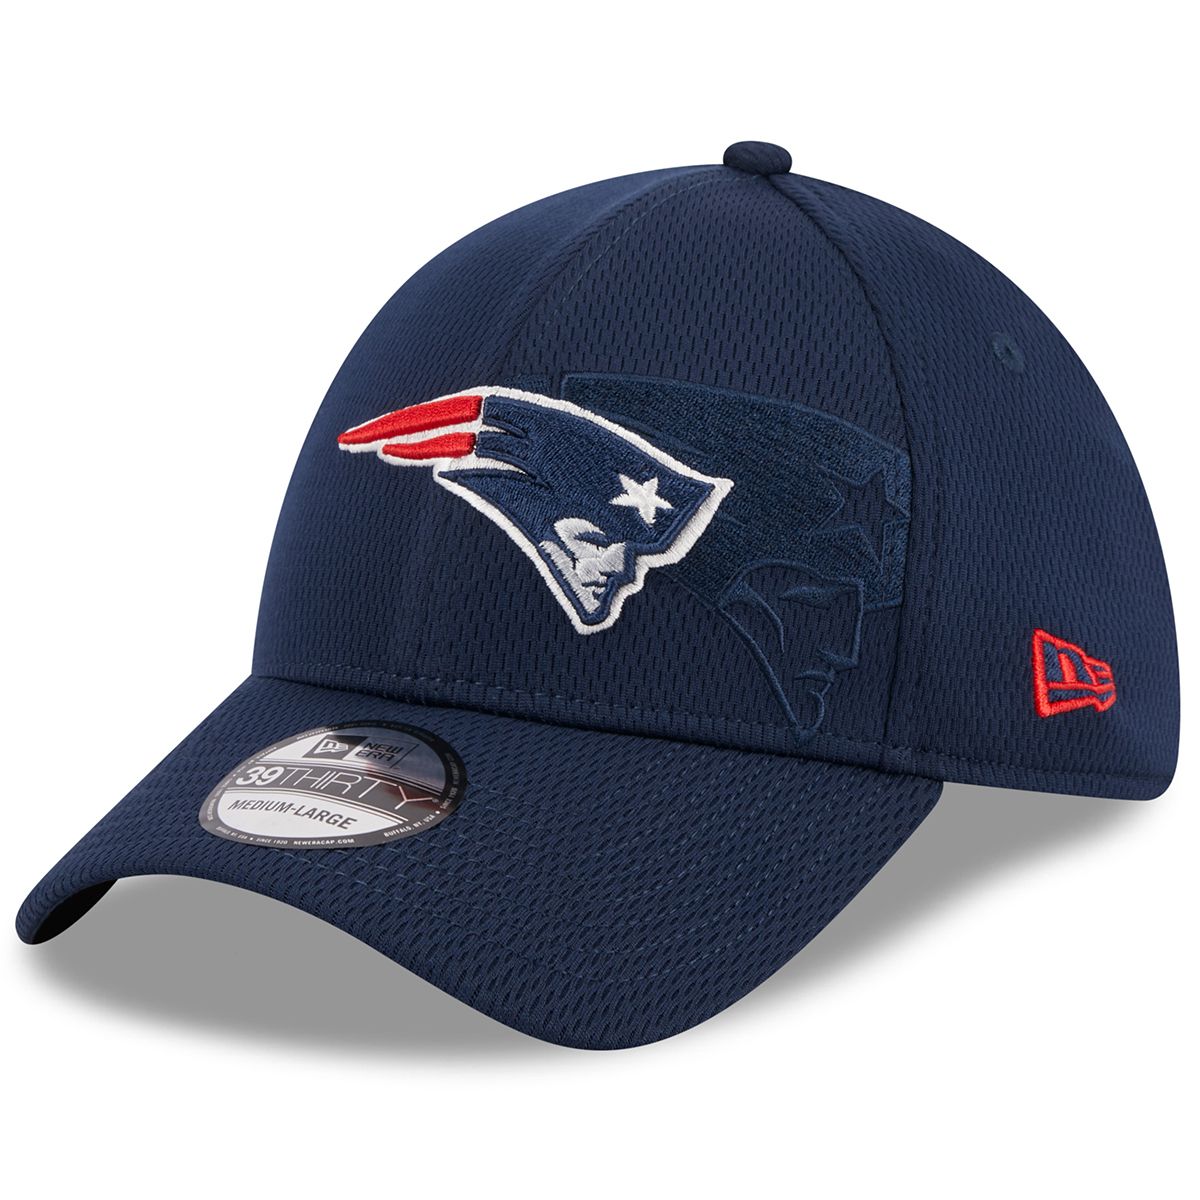 New England Patriots Apparel & Gear: Jerseys, Hats & More